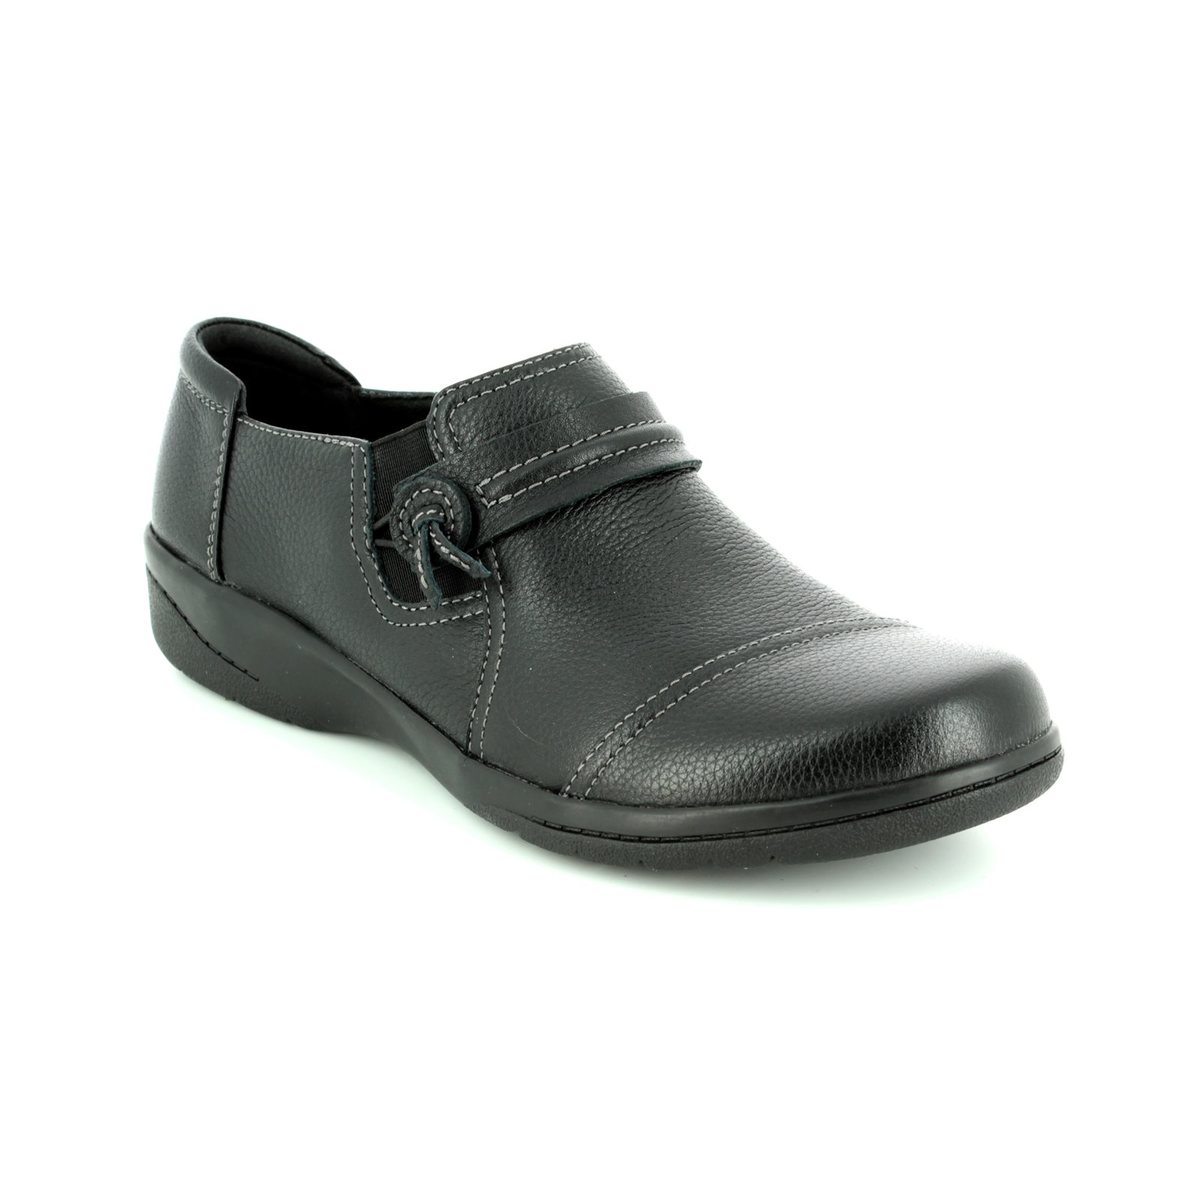 Clarks Cheyn Madi D Fit Black comfort shoes